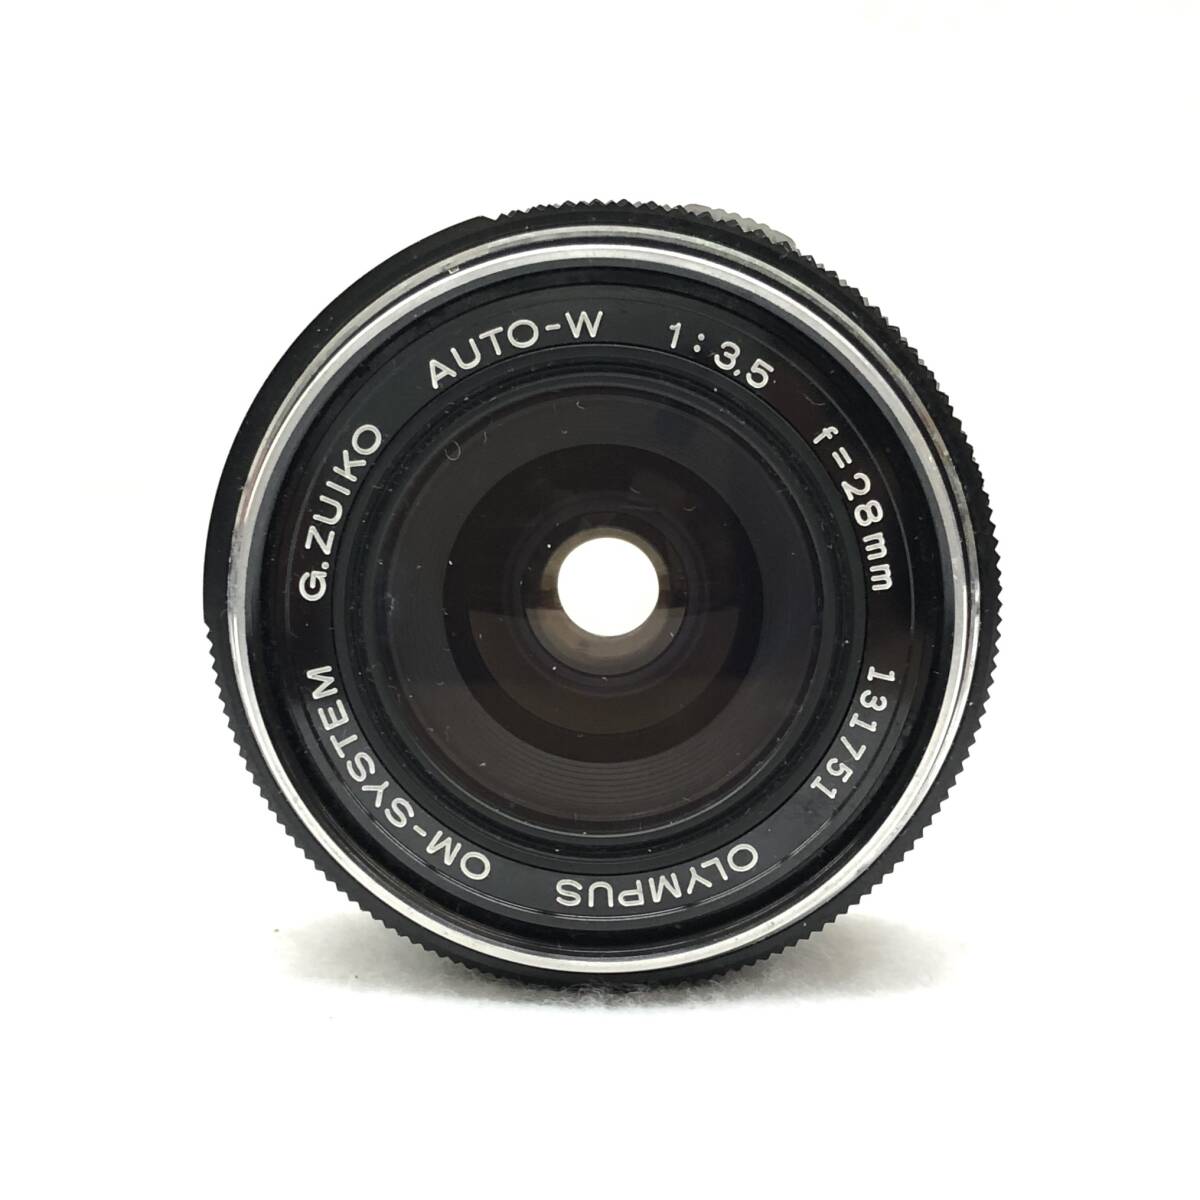 OLYMPUS / OM-SYSTEM 28mm / G.ZUIKO AUTO-W 1:3.5 f=28mm / 3.5/28 / オリンパス / 一眼カメラ用 / 単焦点レンズ / ケース他付き / 現状品_画像1